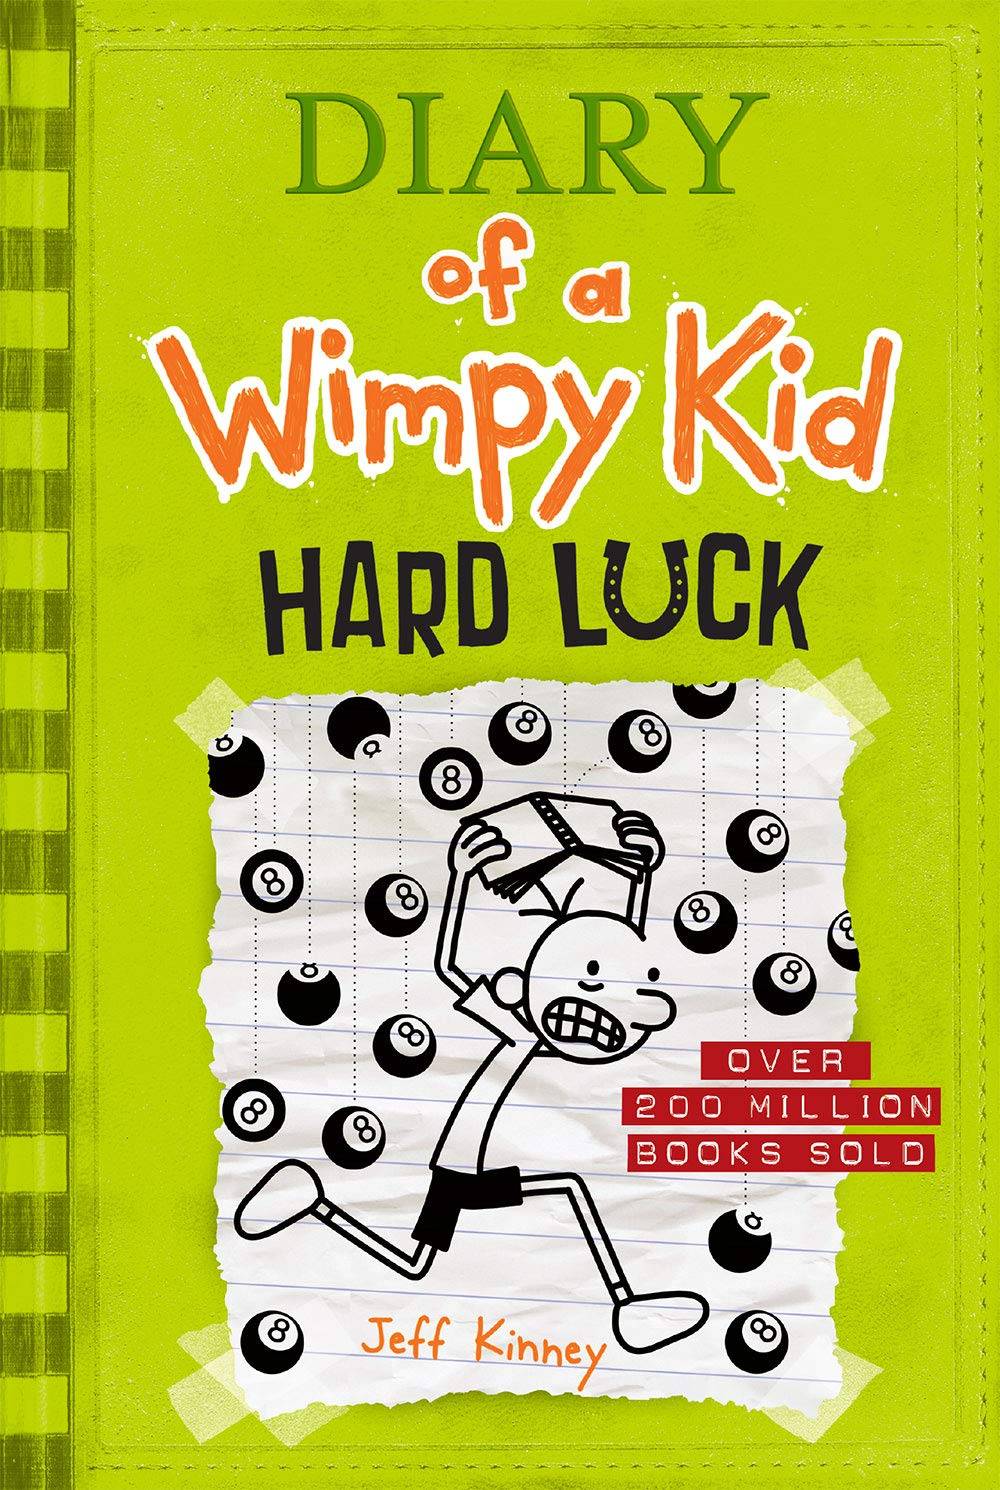 IMG : Wimpy kid- Hard Luck